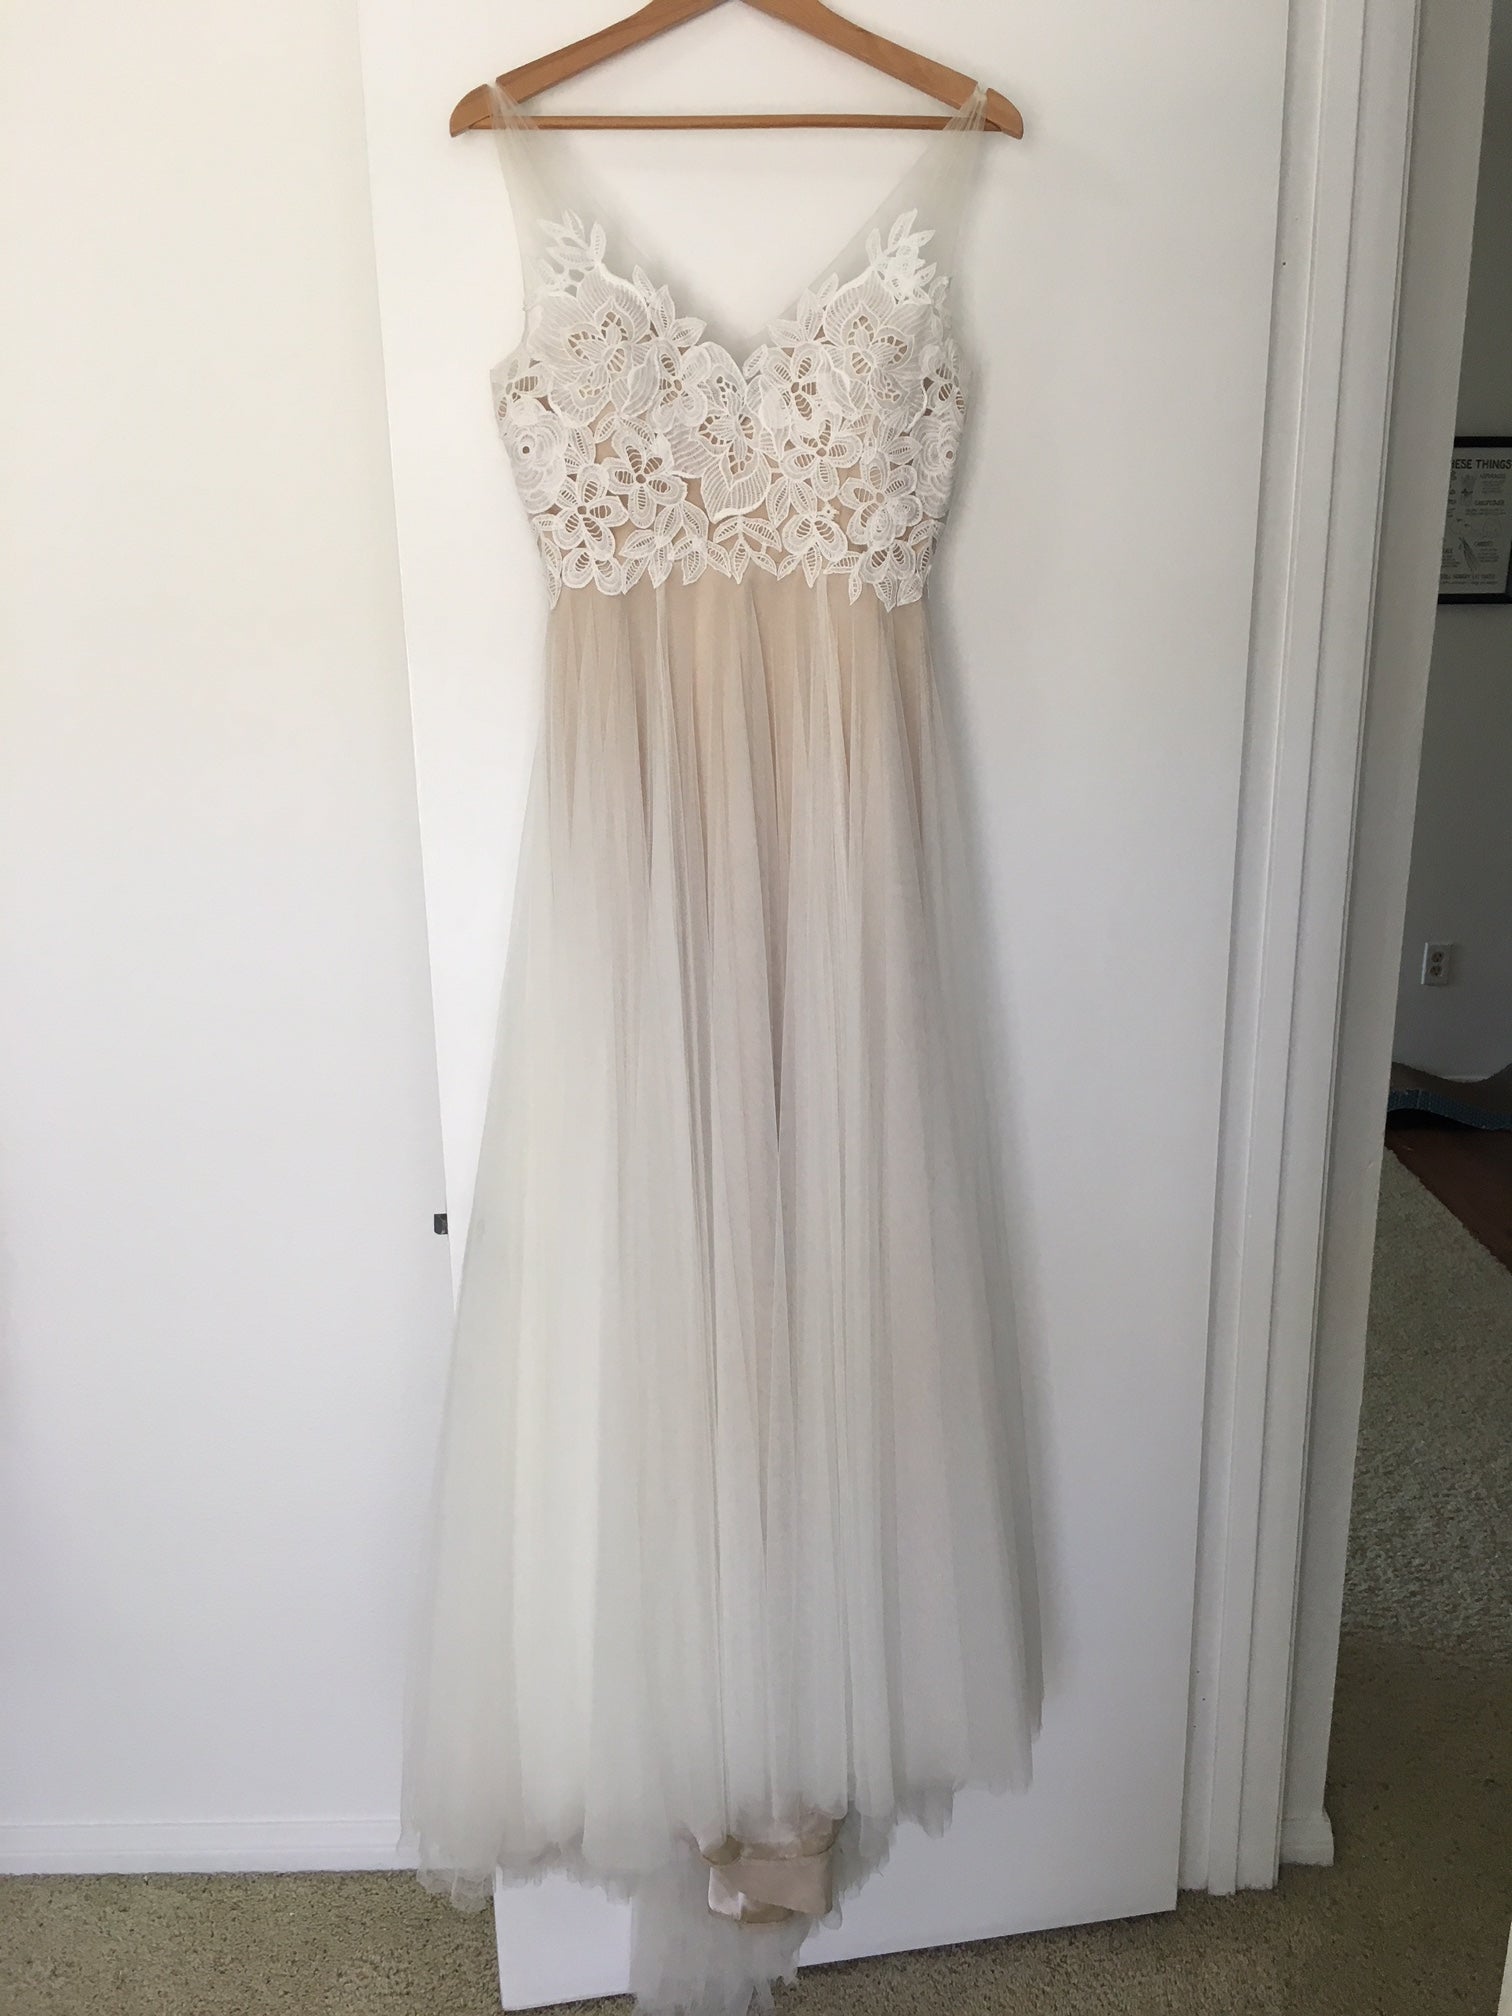 BHLDN 'Heritage' size 4 used wedding dress – Nearly Newlywed